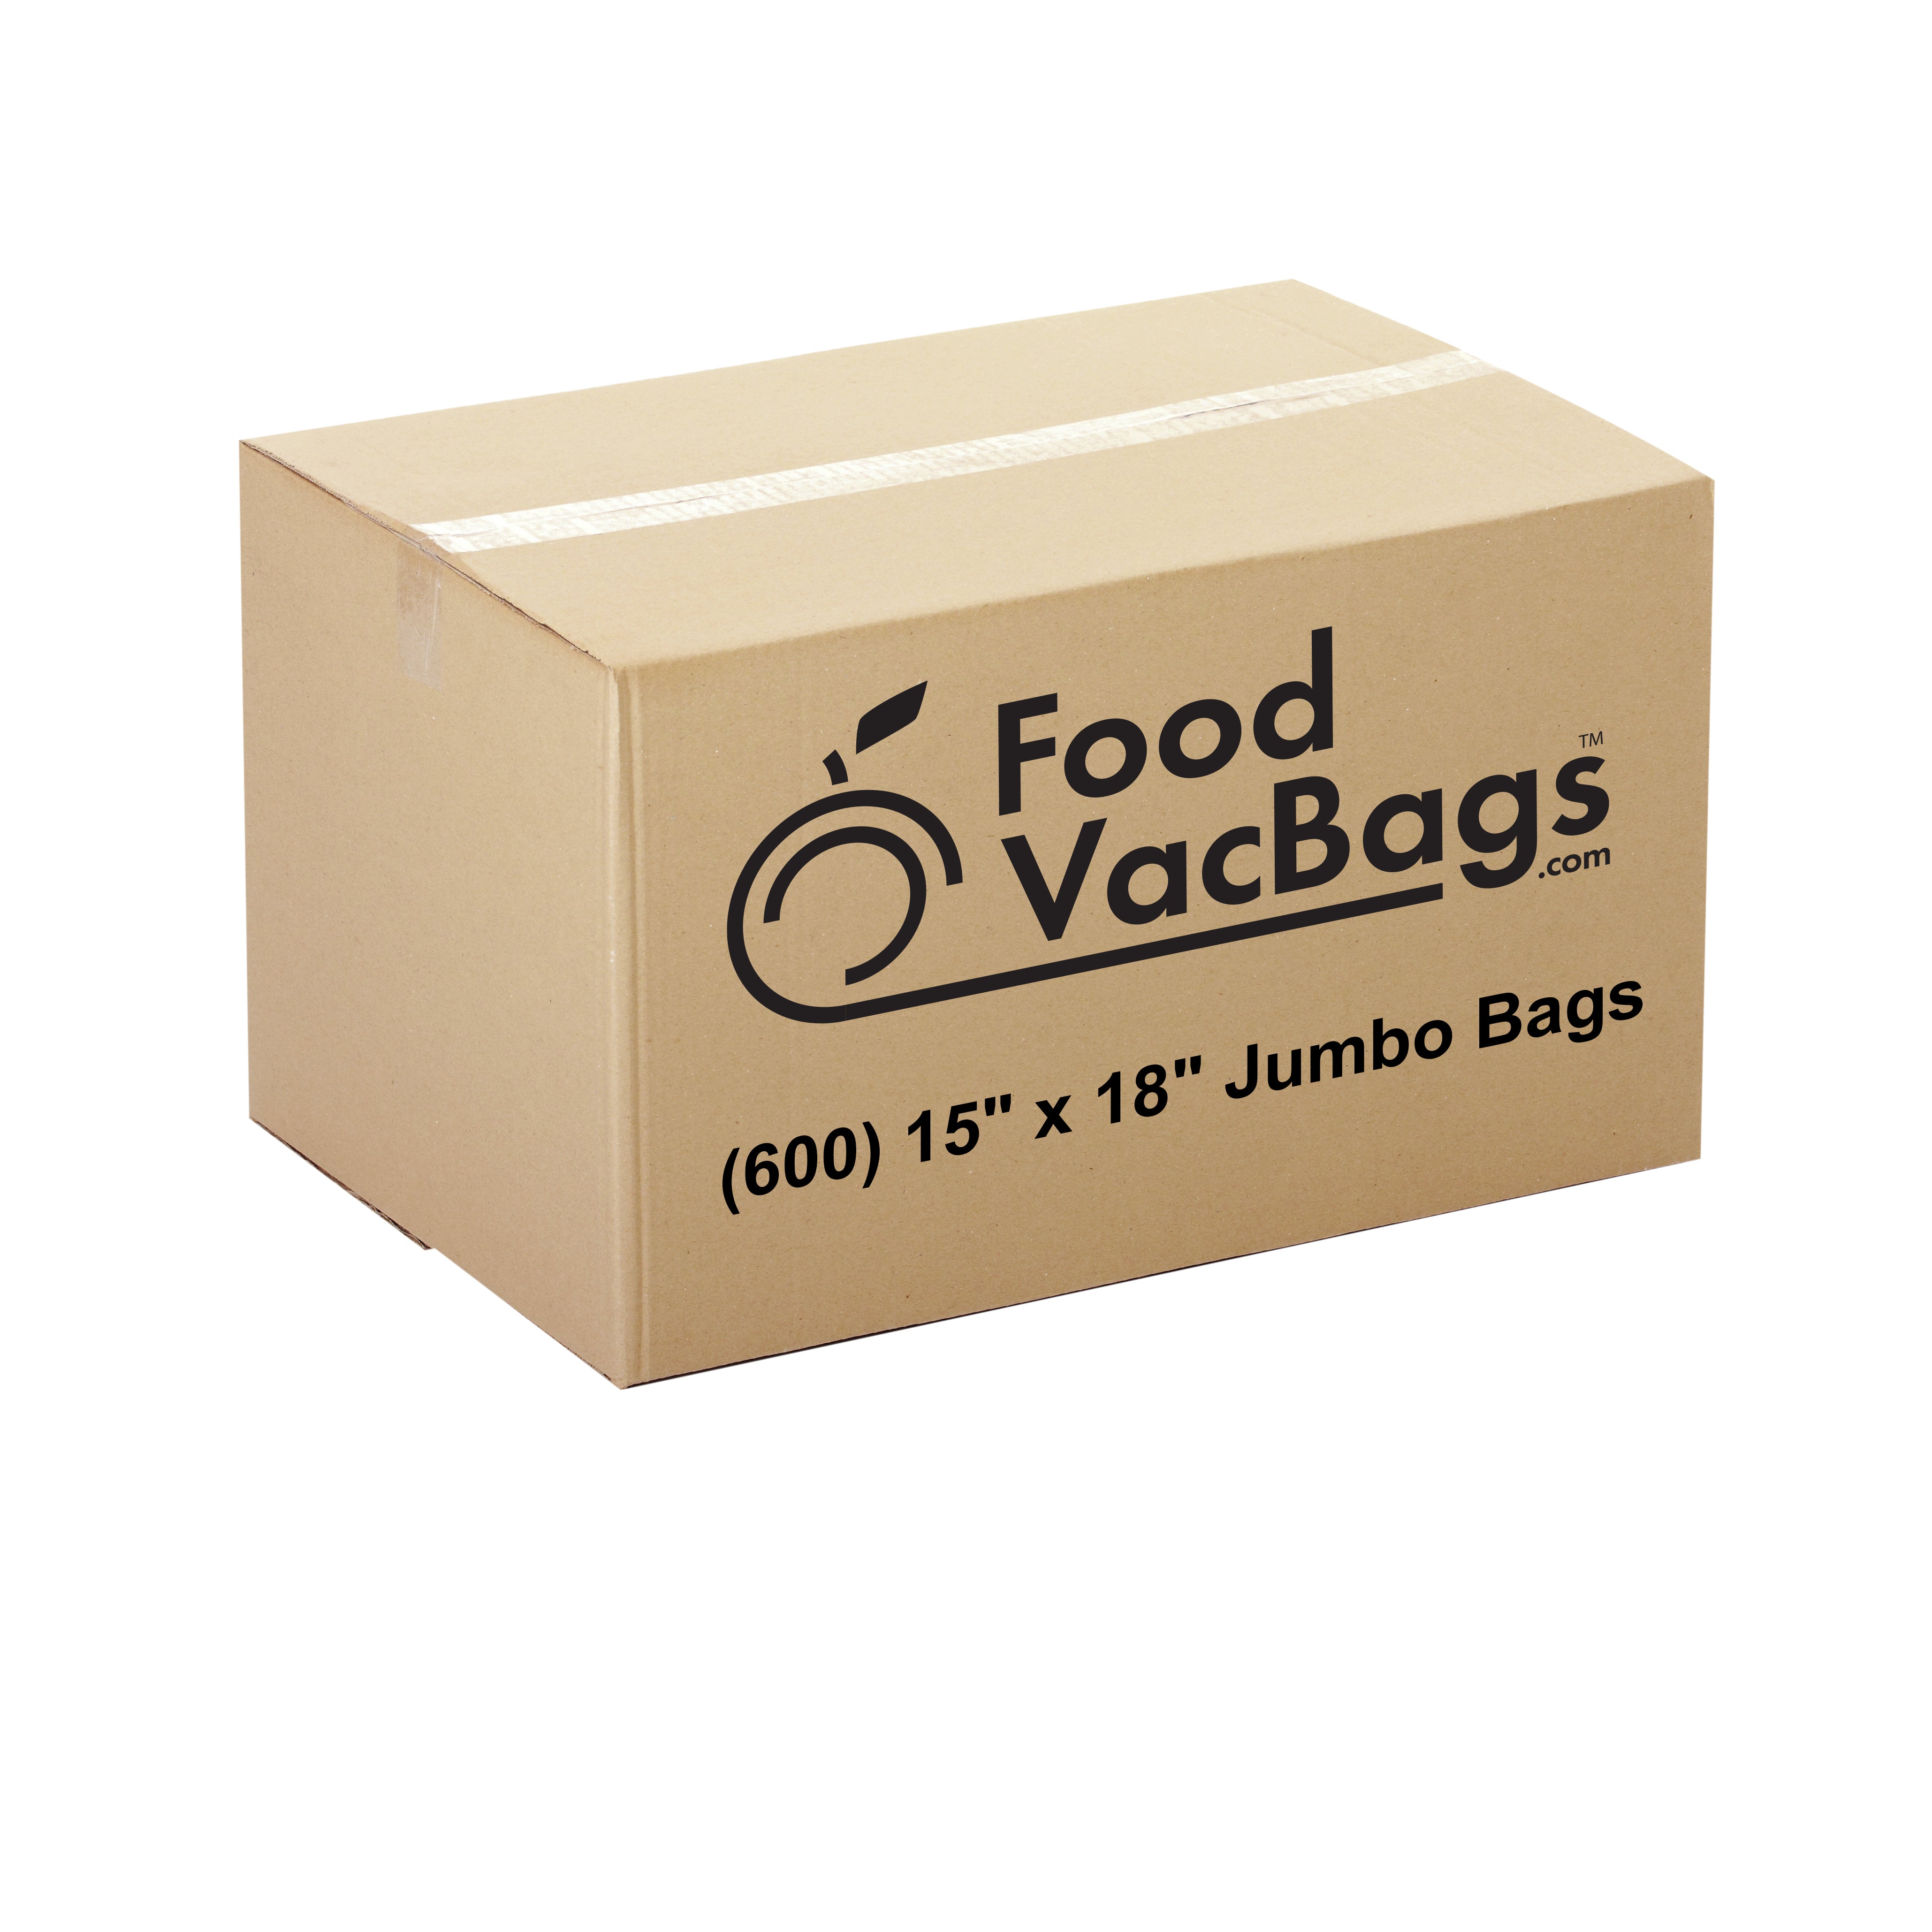 600 FoodVacBags 15" X 18" Jumbo Bags - FoodSaver Compatible - Sous Vide